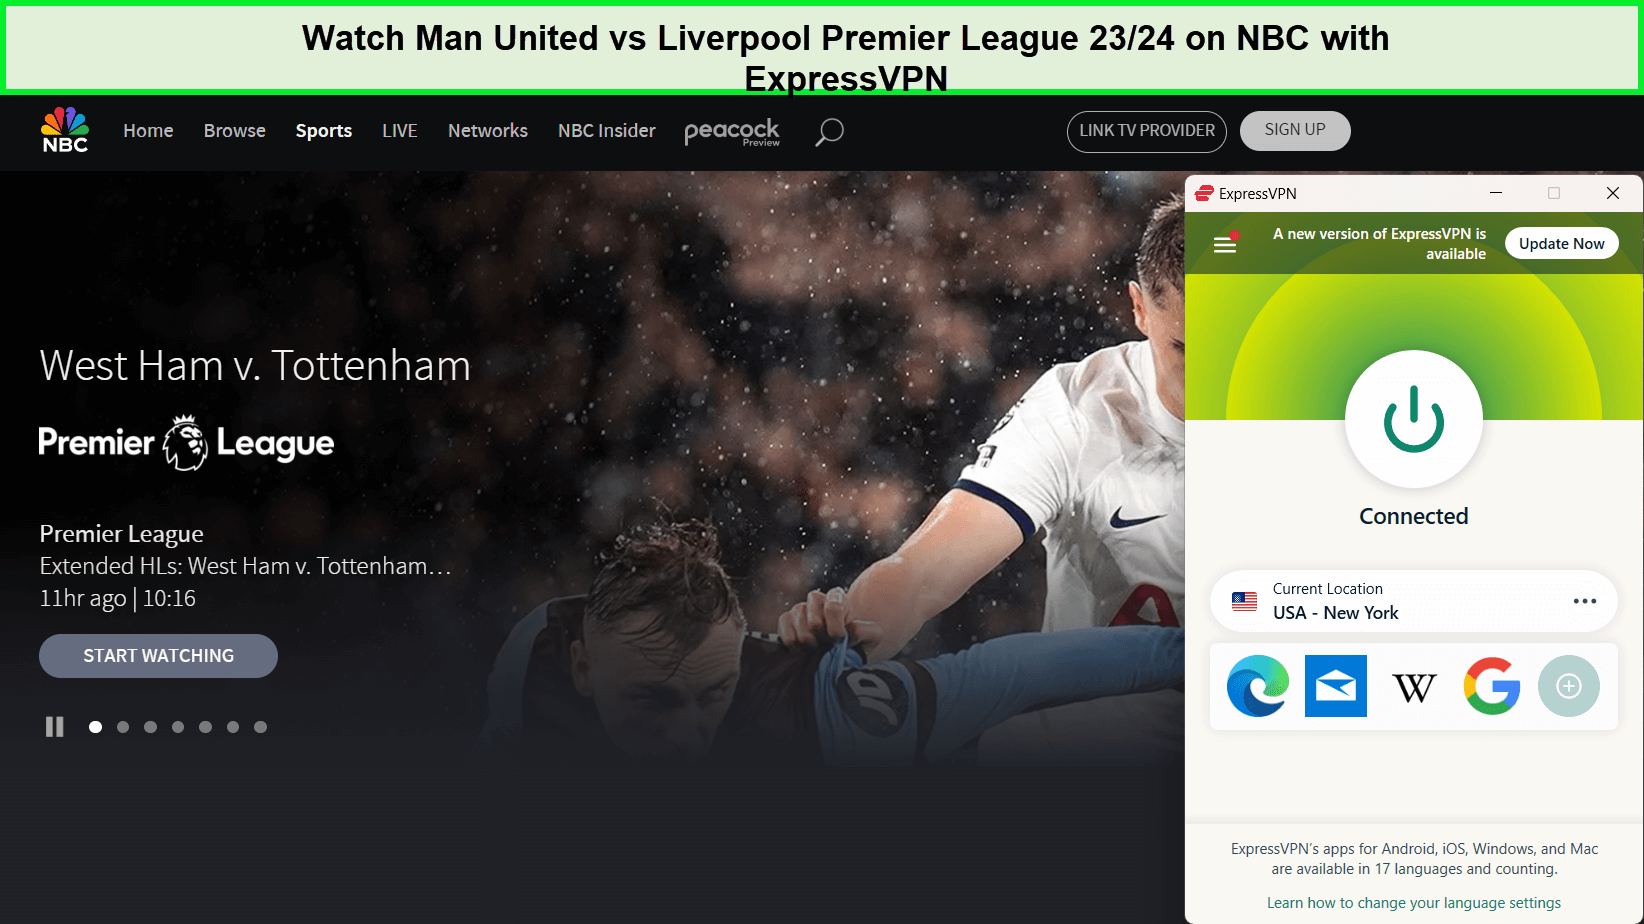 Watch-Man-United-vs-Liverpool-Premier-League-23-24-in-Spain-on-NBC